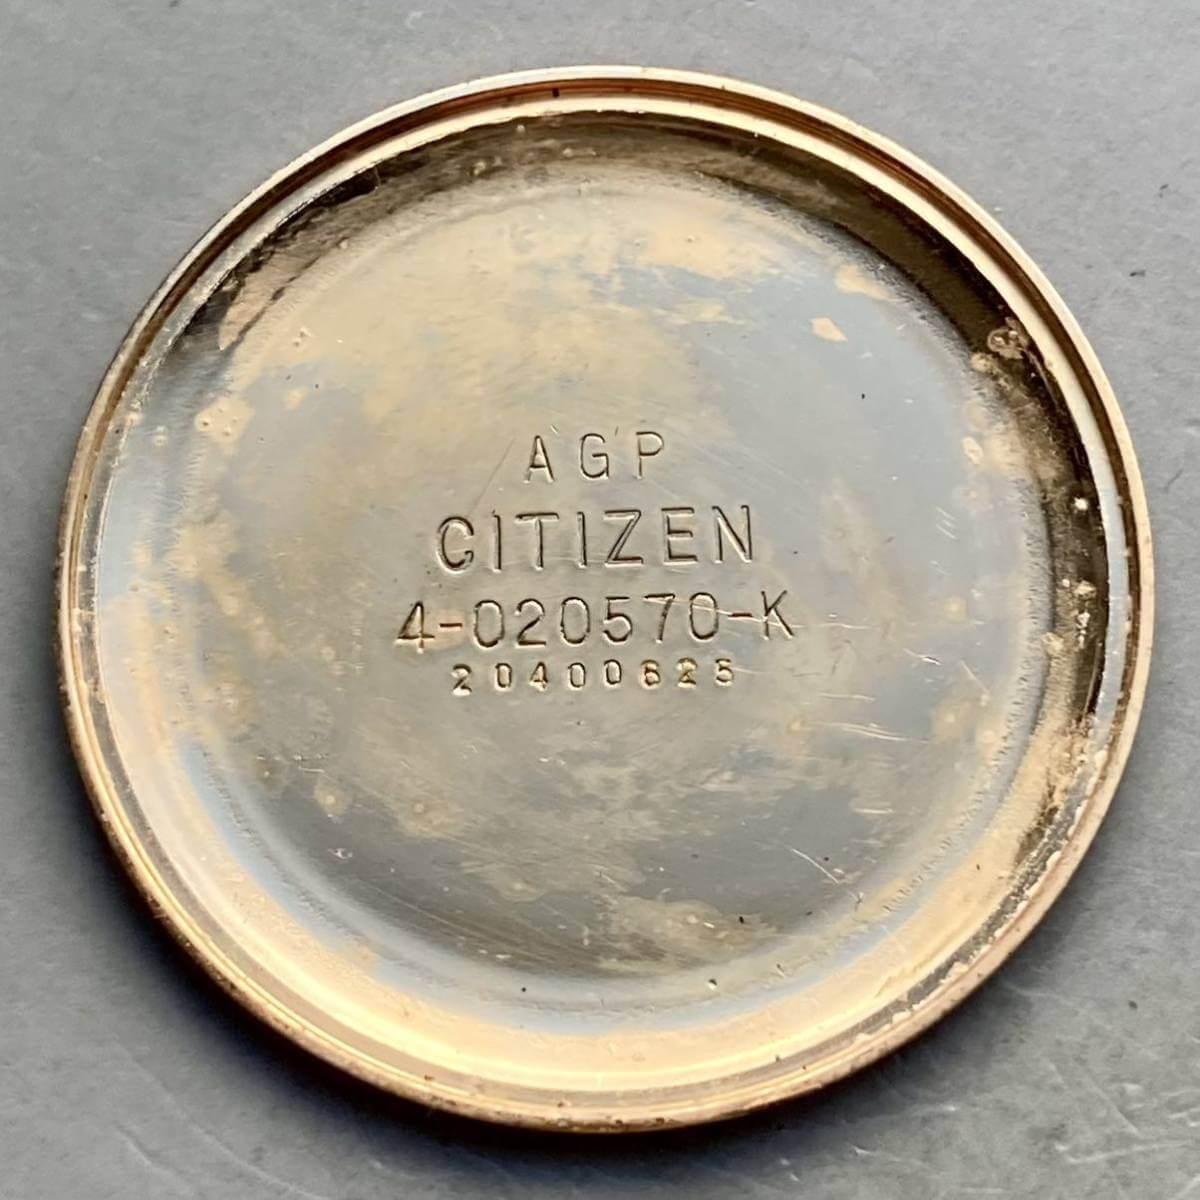 Citizen Pocket Watch Antique Gold 41mm Vintage Open Face - Murphy Johnson Watches Co.